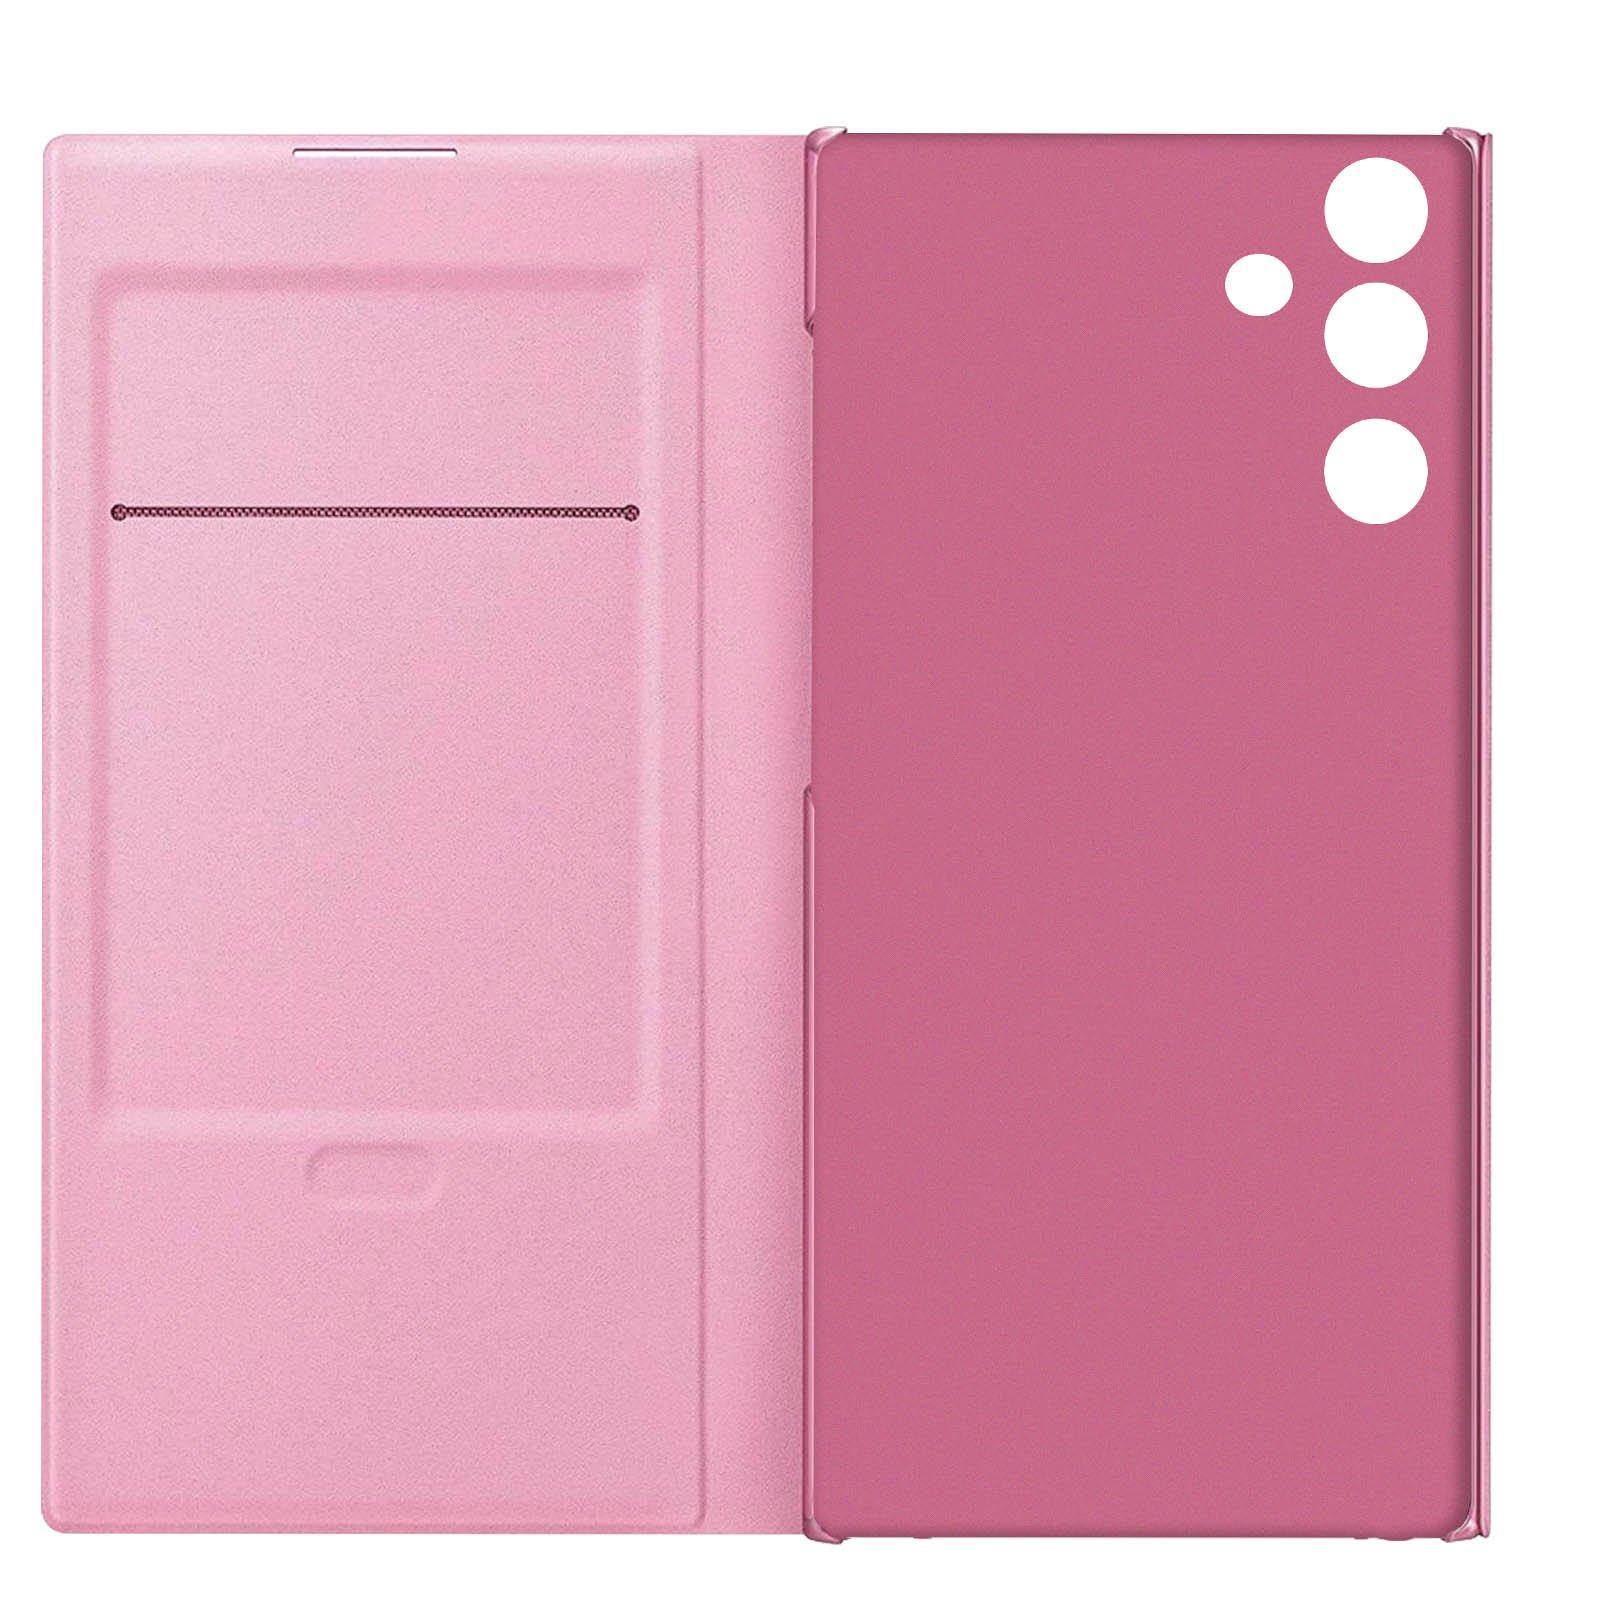 SAMSUNG  Custodia Galaxy Note 10 LED View rosa 